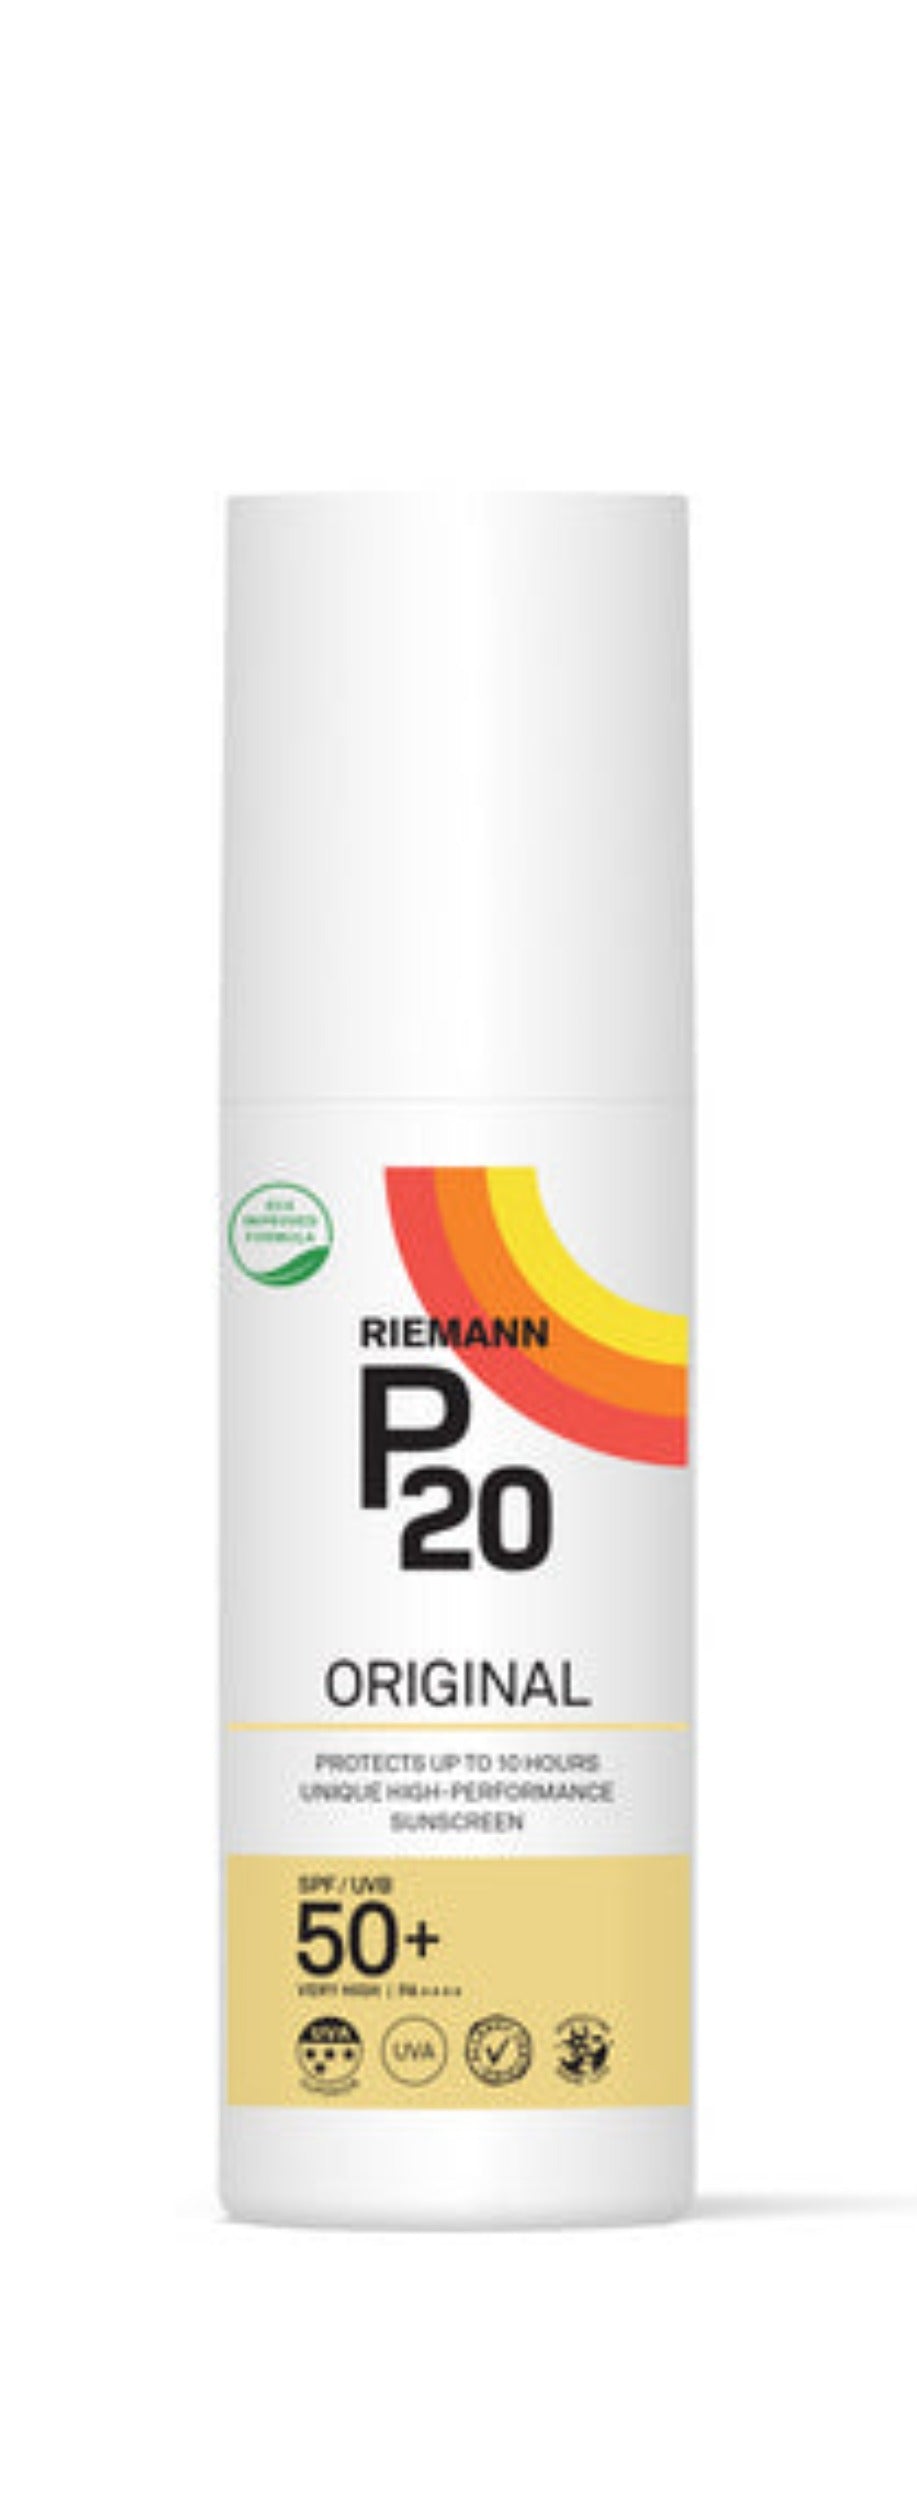 P20 Original Spray SPF 50+ 85ml